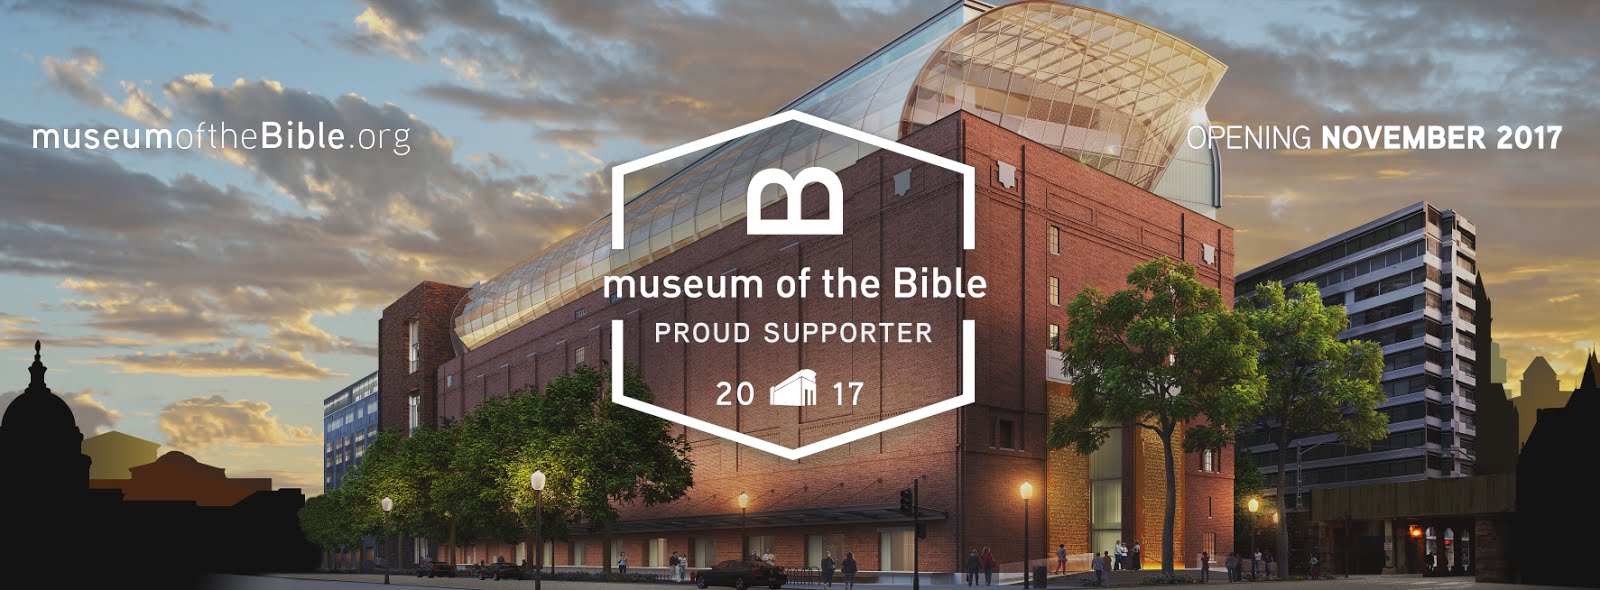 Museo de la Biblia -Whashinton DC